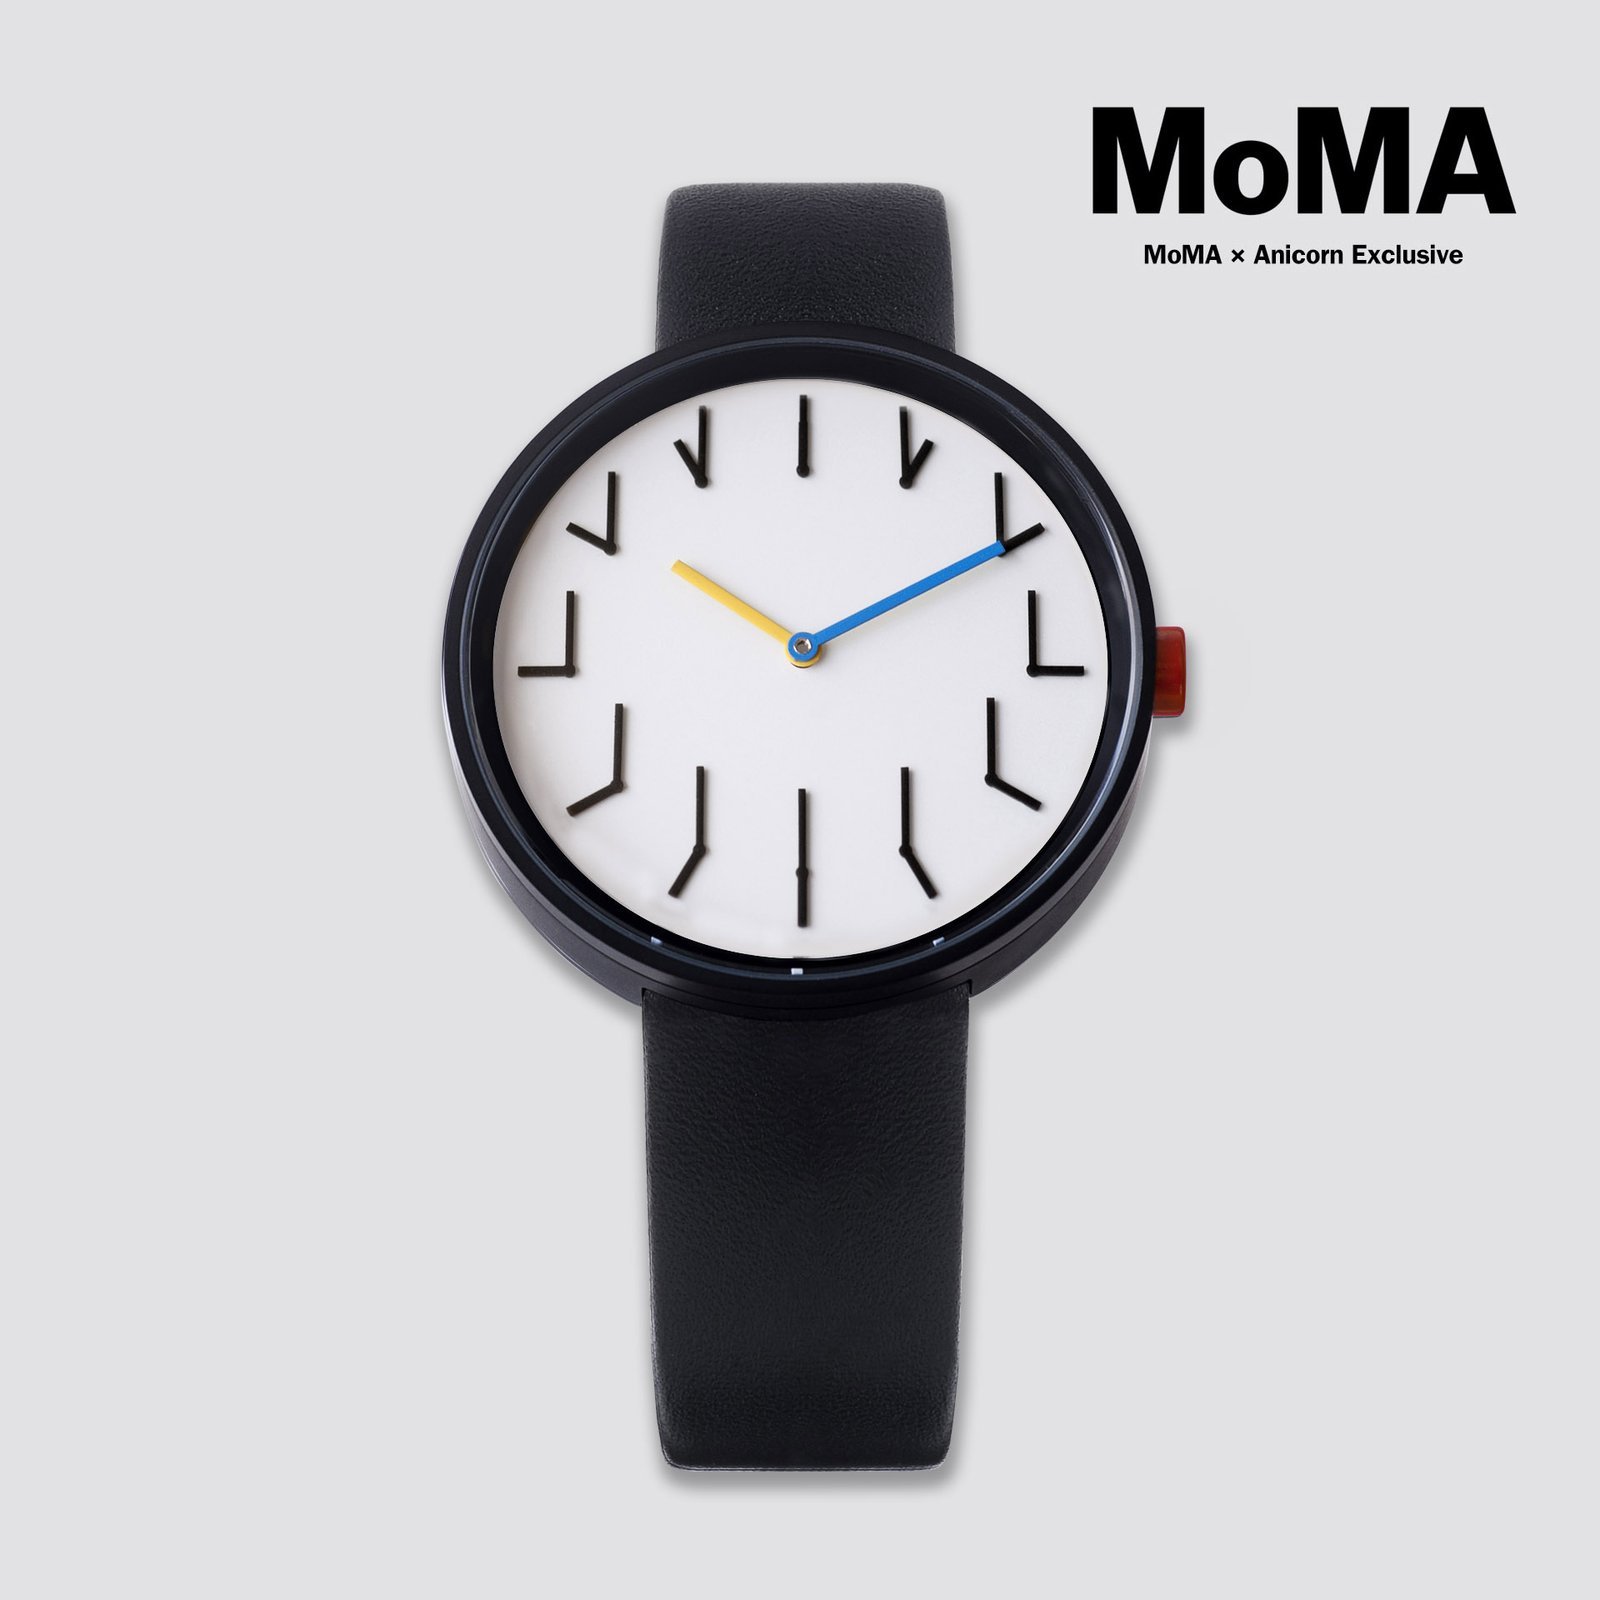 anicorn-redundant-watch-moma-00_365858d3-f4a5-46b6-af5b-0fc9557b5b30_1600x.jpeg